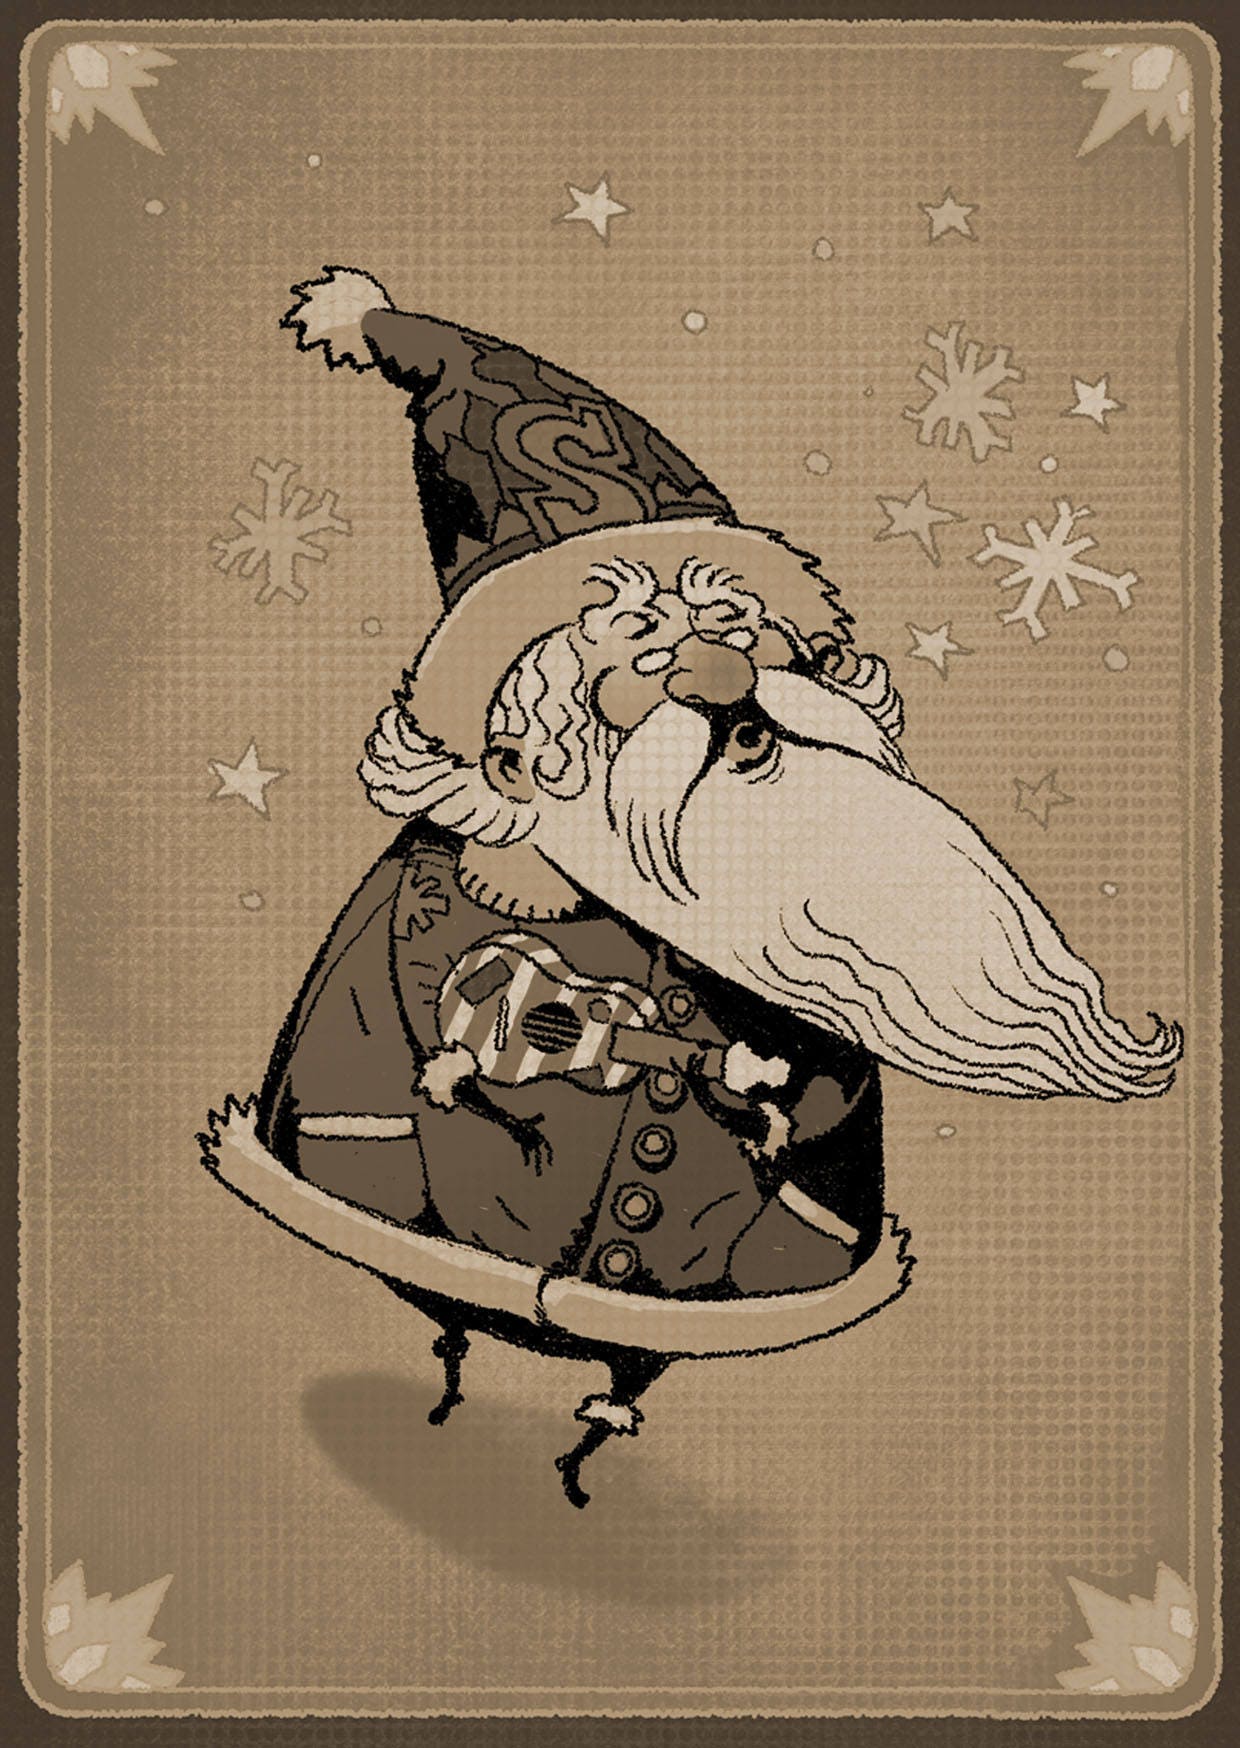 Ukulele Goblin 3 Amigos Single Christmas Card 